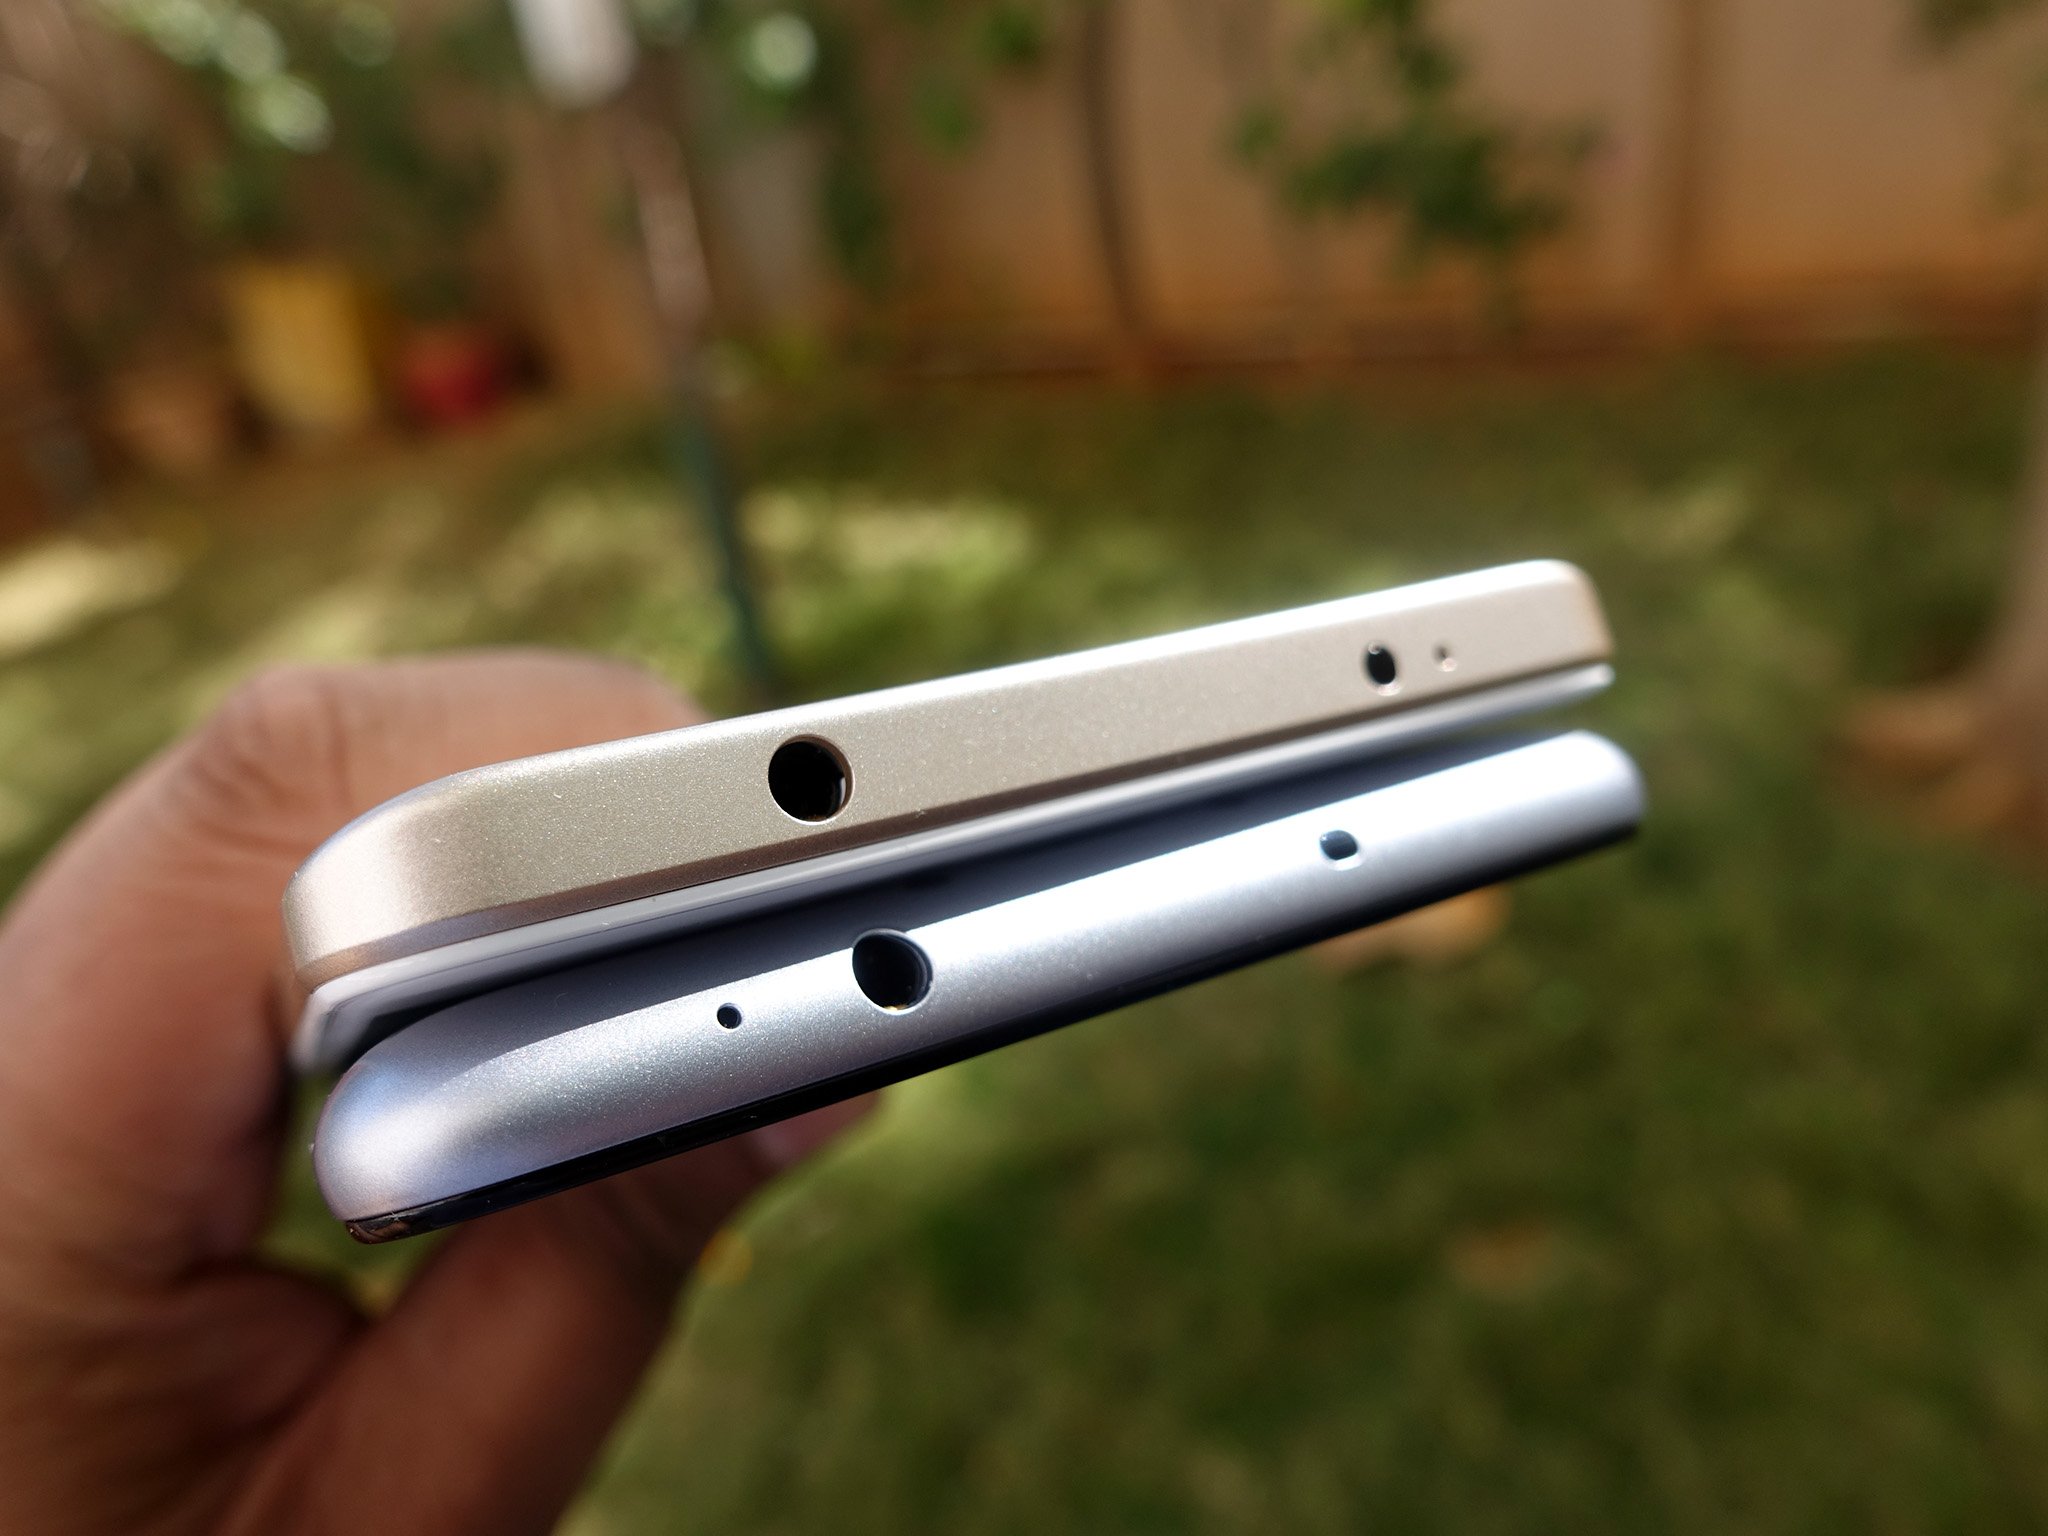 Xiaomi Redmi Note 4 Vs Redmi Note 3 Should You Upgrade